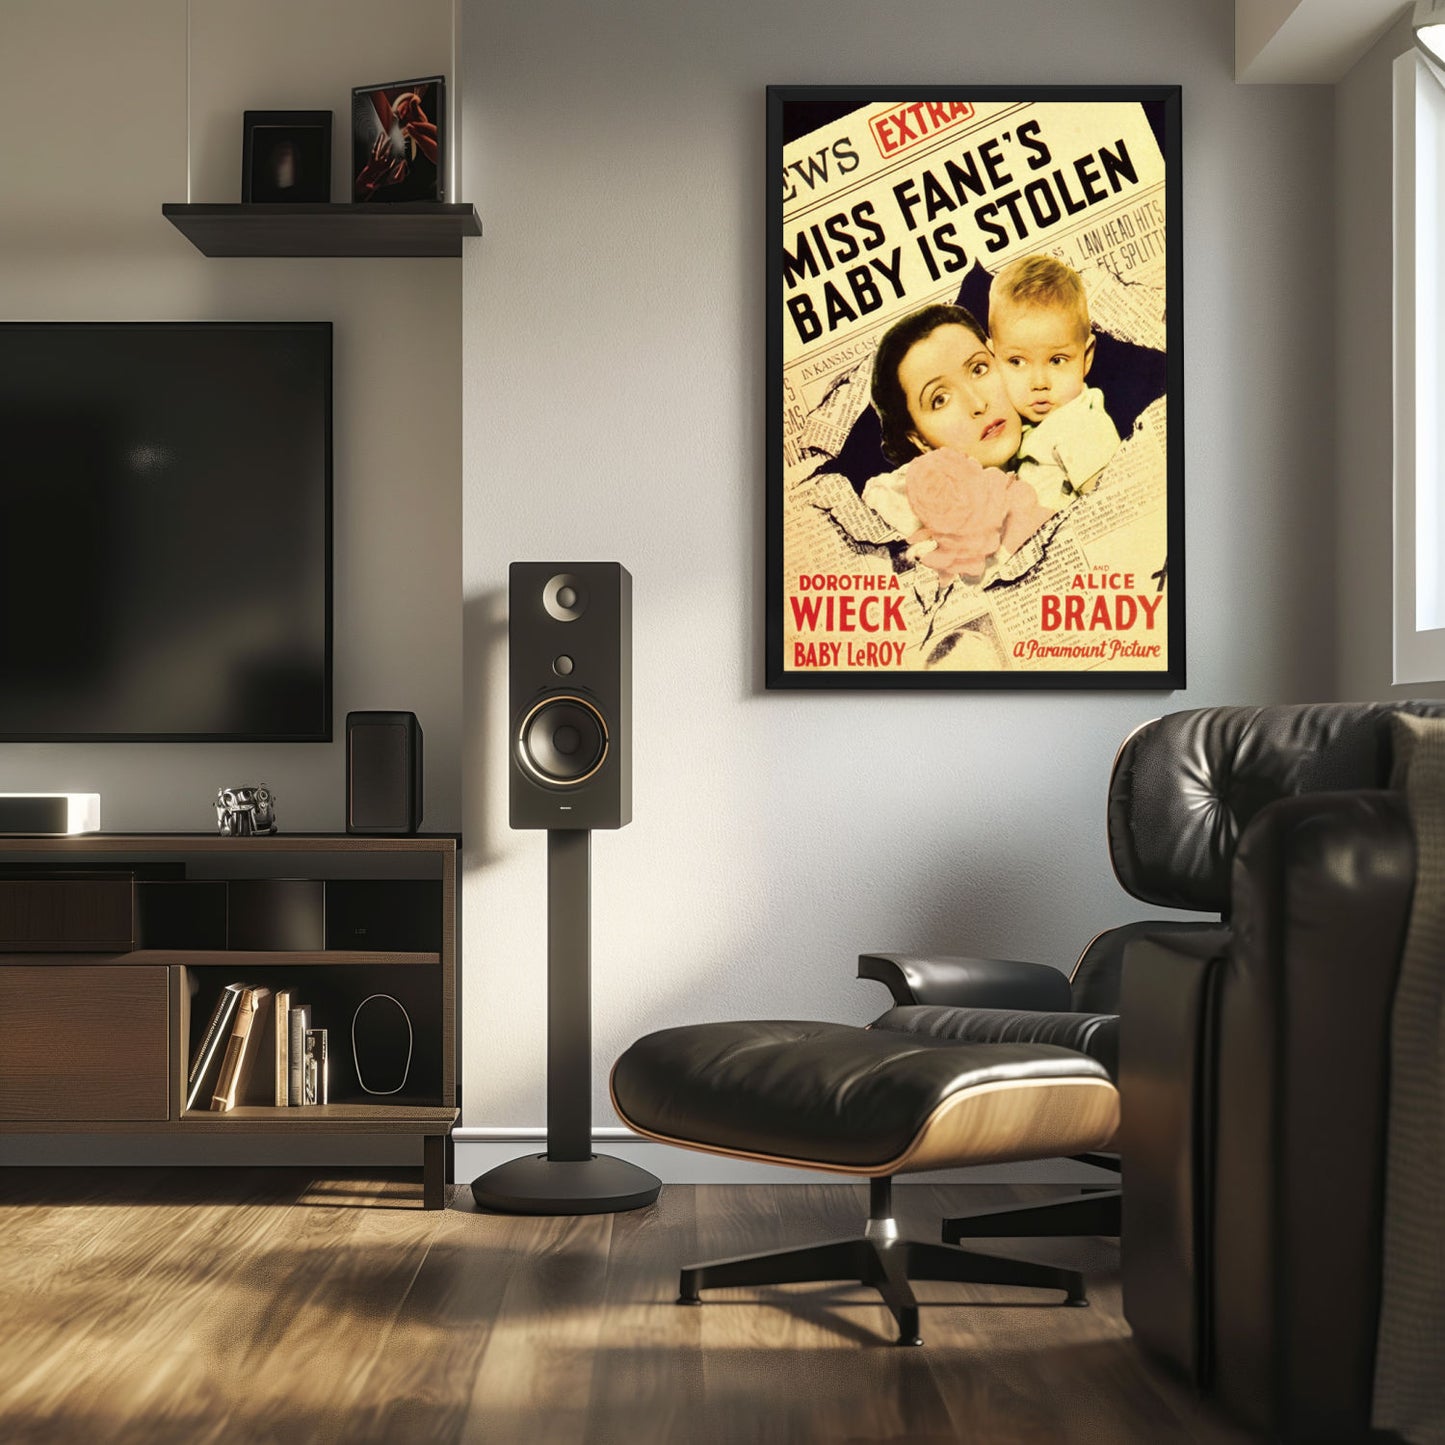 "Miss Fane's Baby Is Stolen" (1934) Framed Movie Poster